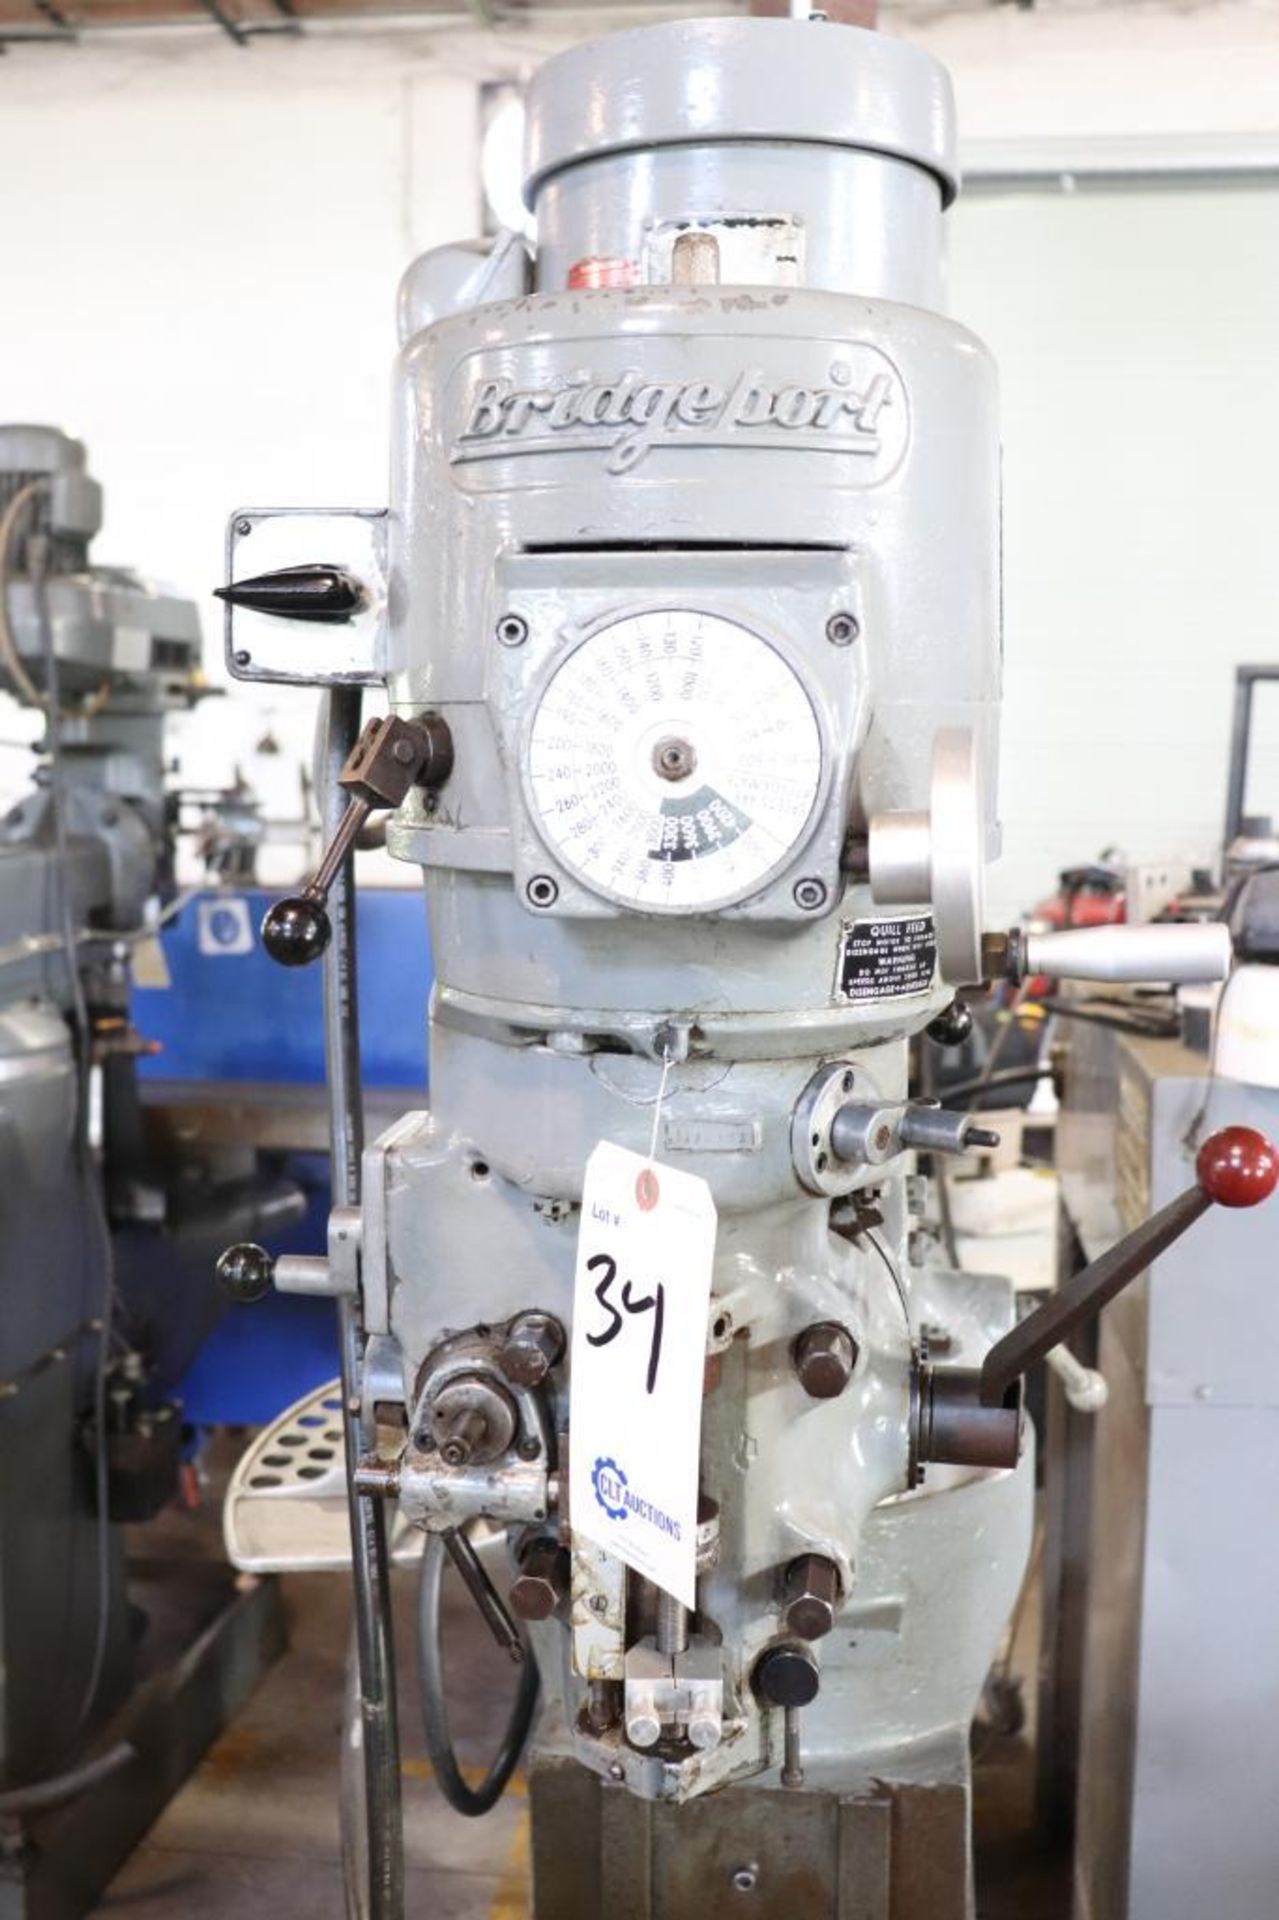 Import milling machine w/ Bridgeport head - Image 6 of 13